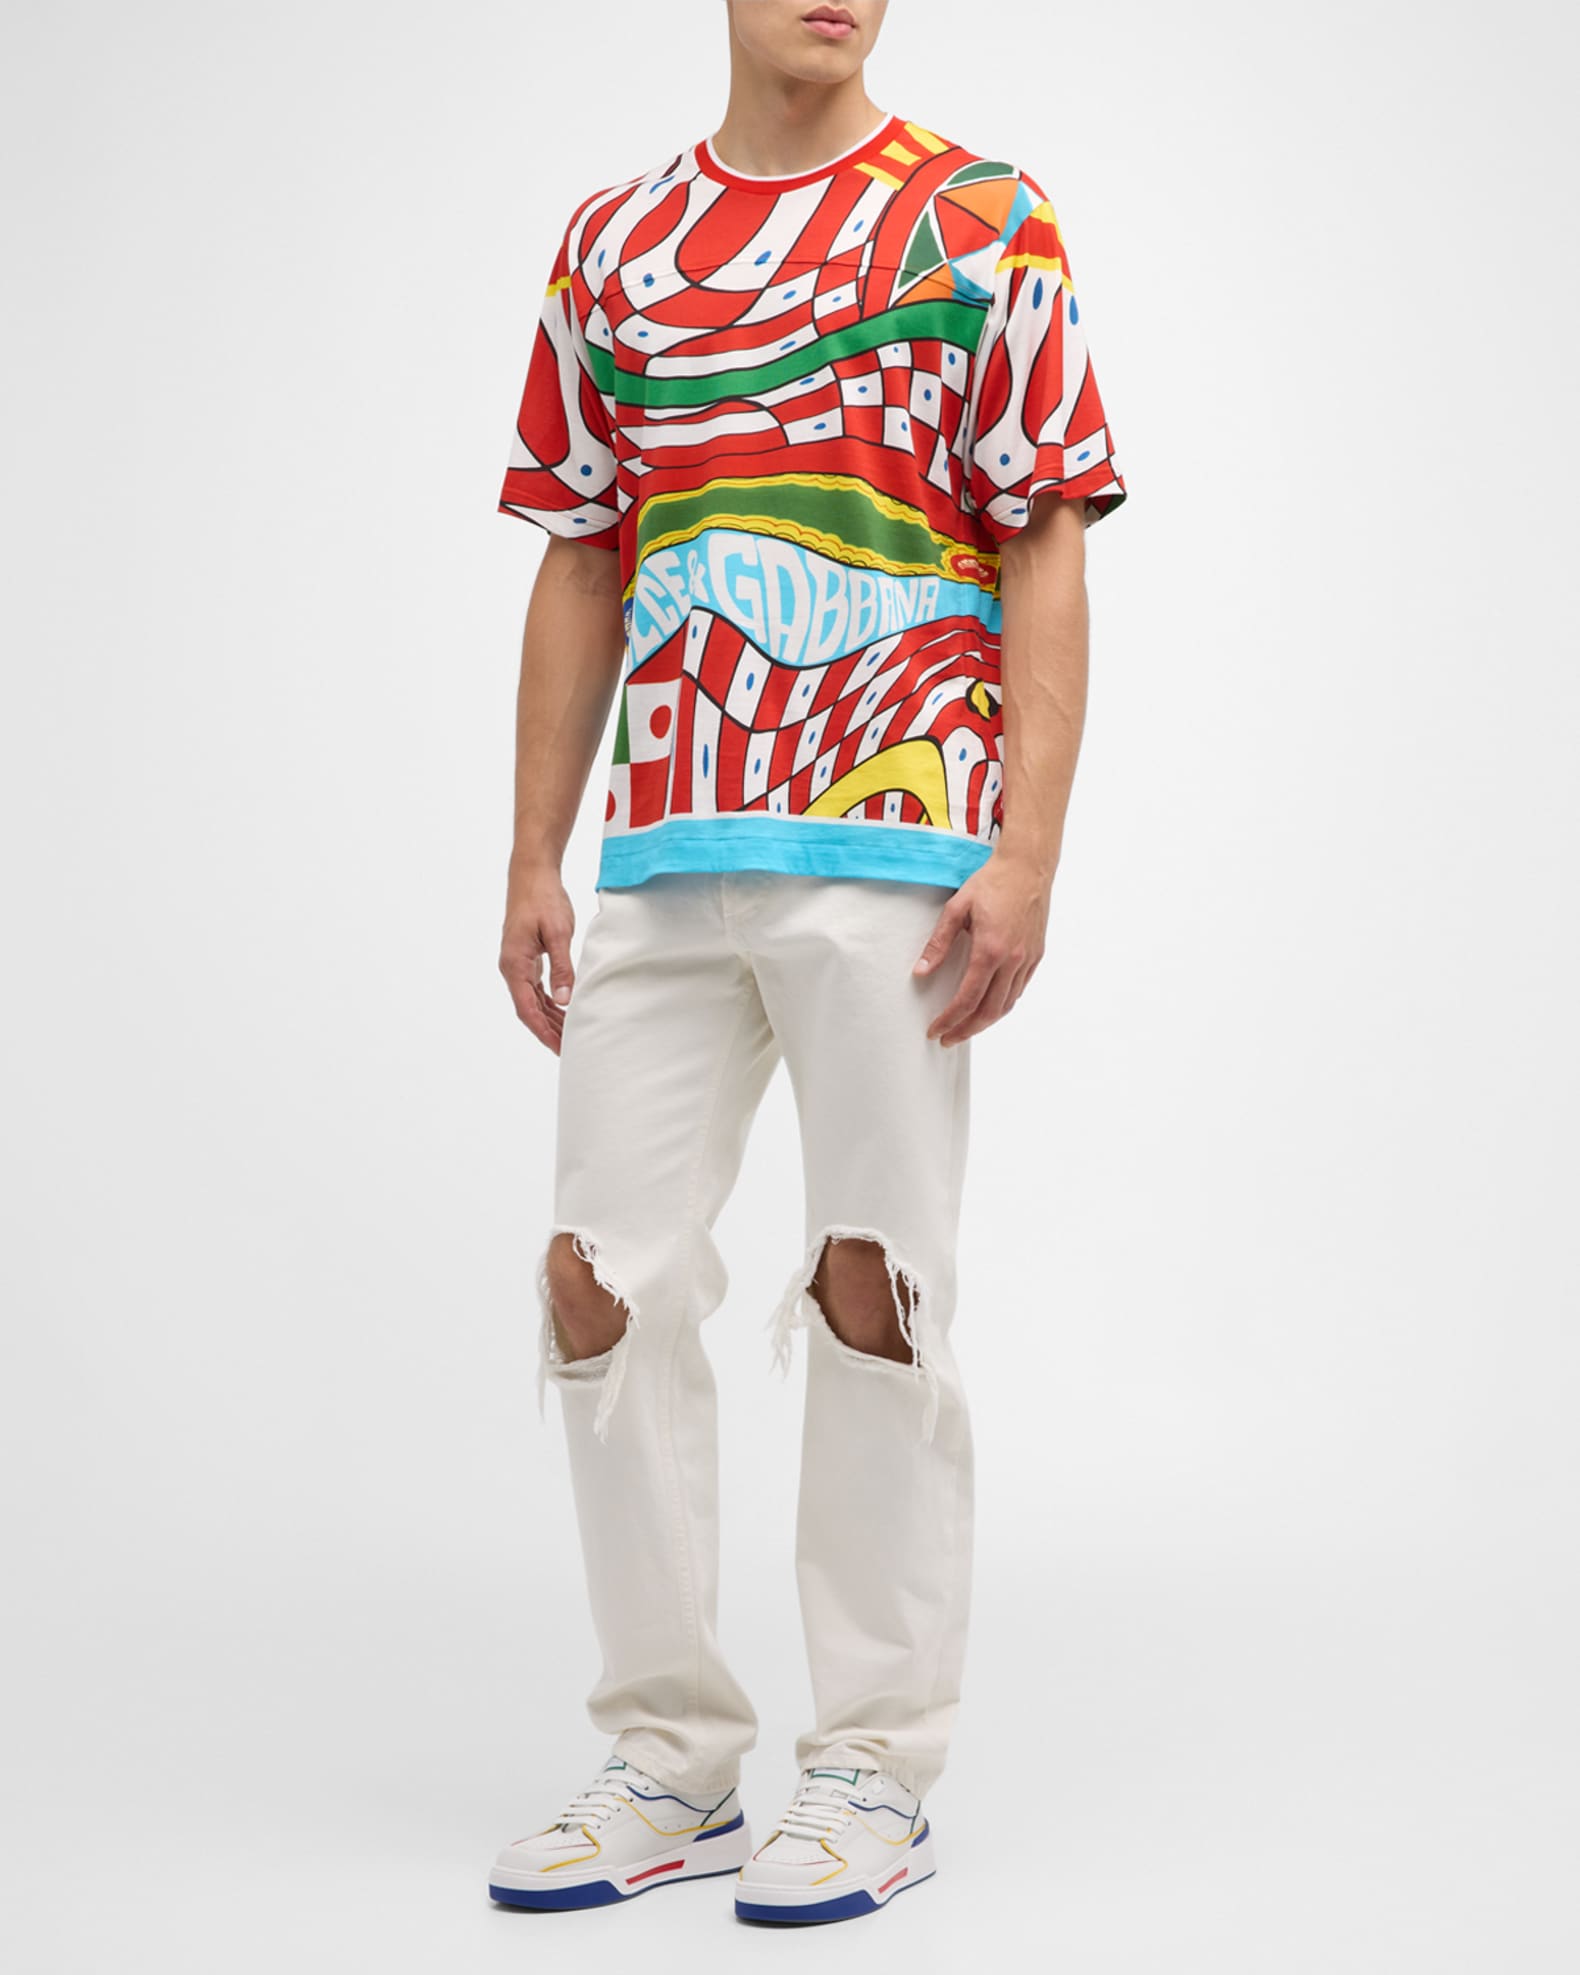 Dolce&Gabbana Men's Carretto Printed T-Shirt | Neiman Marcus